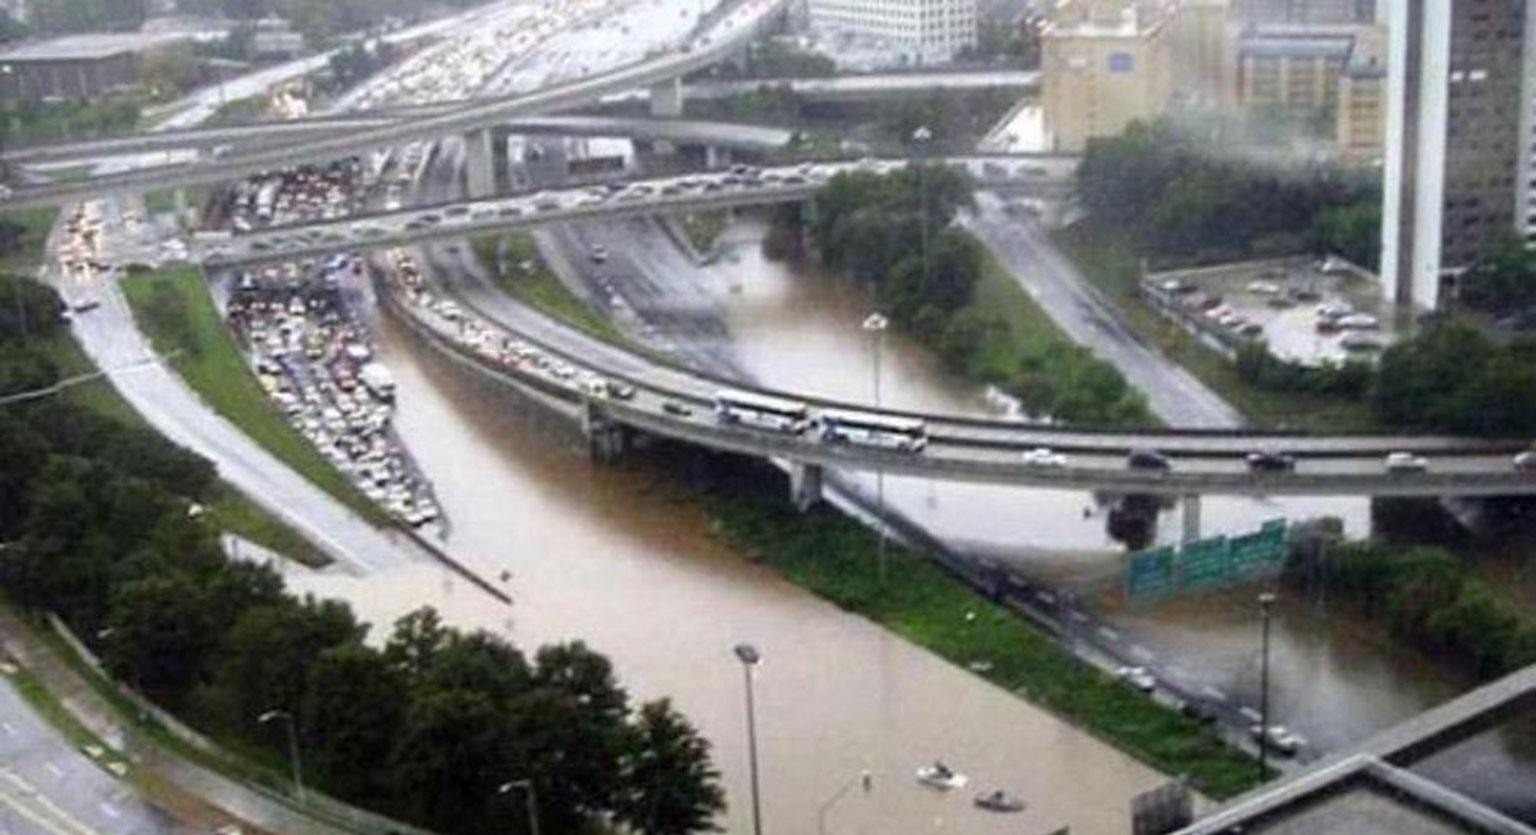 Heavy rain and flood shuts down major highway causing traffic jam. 